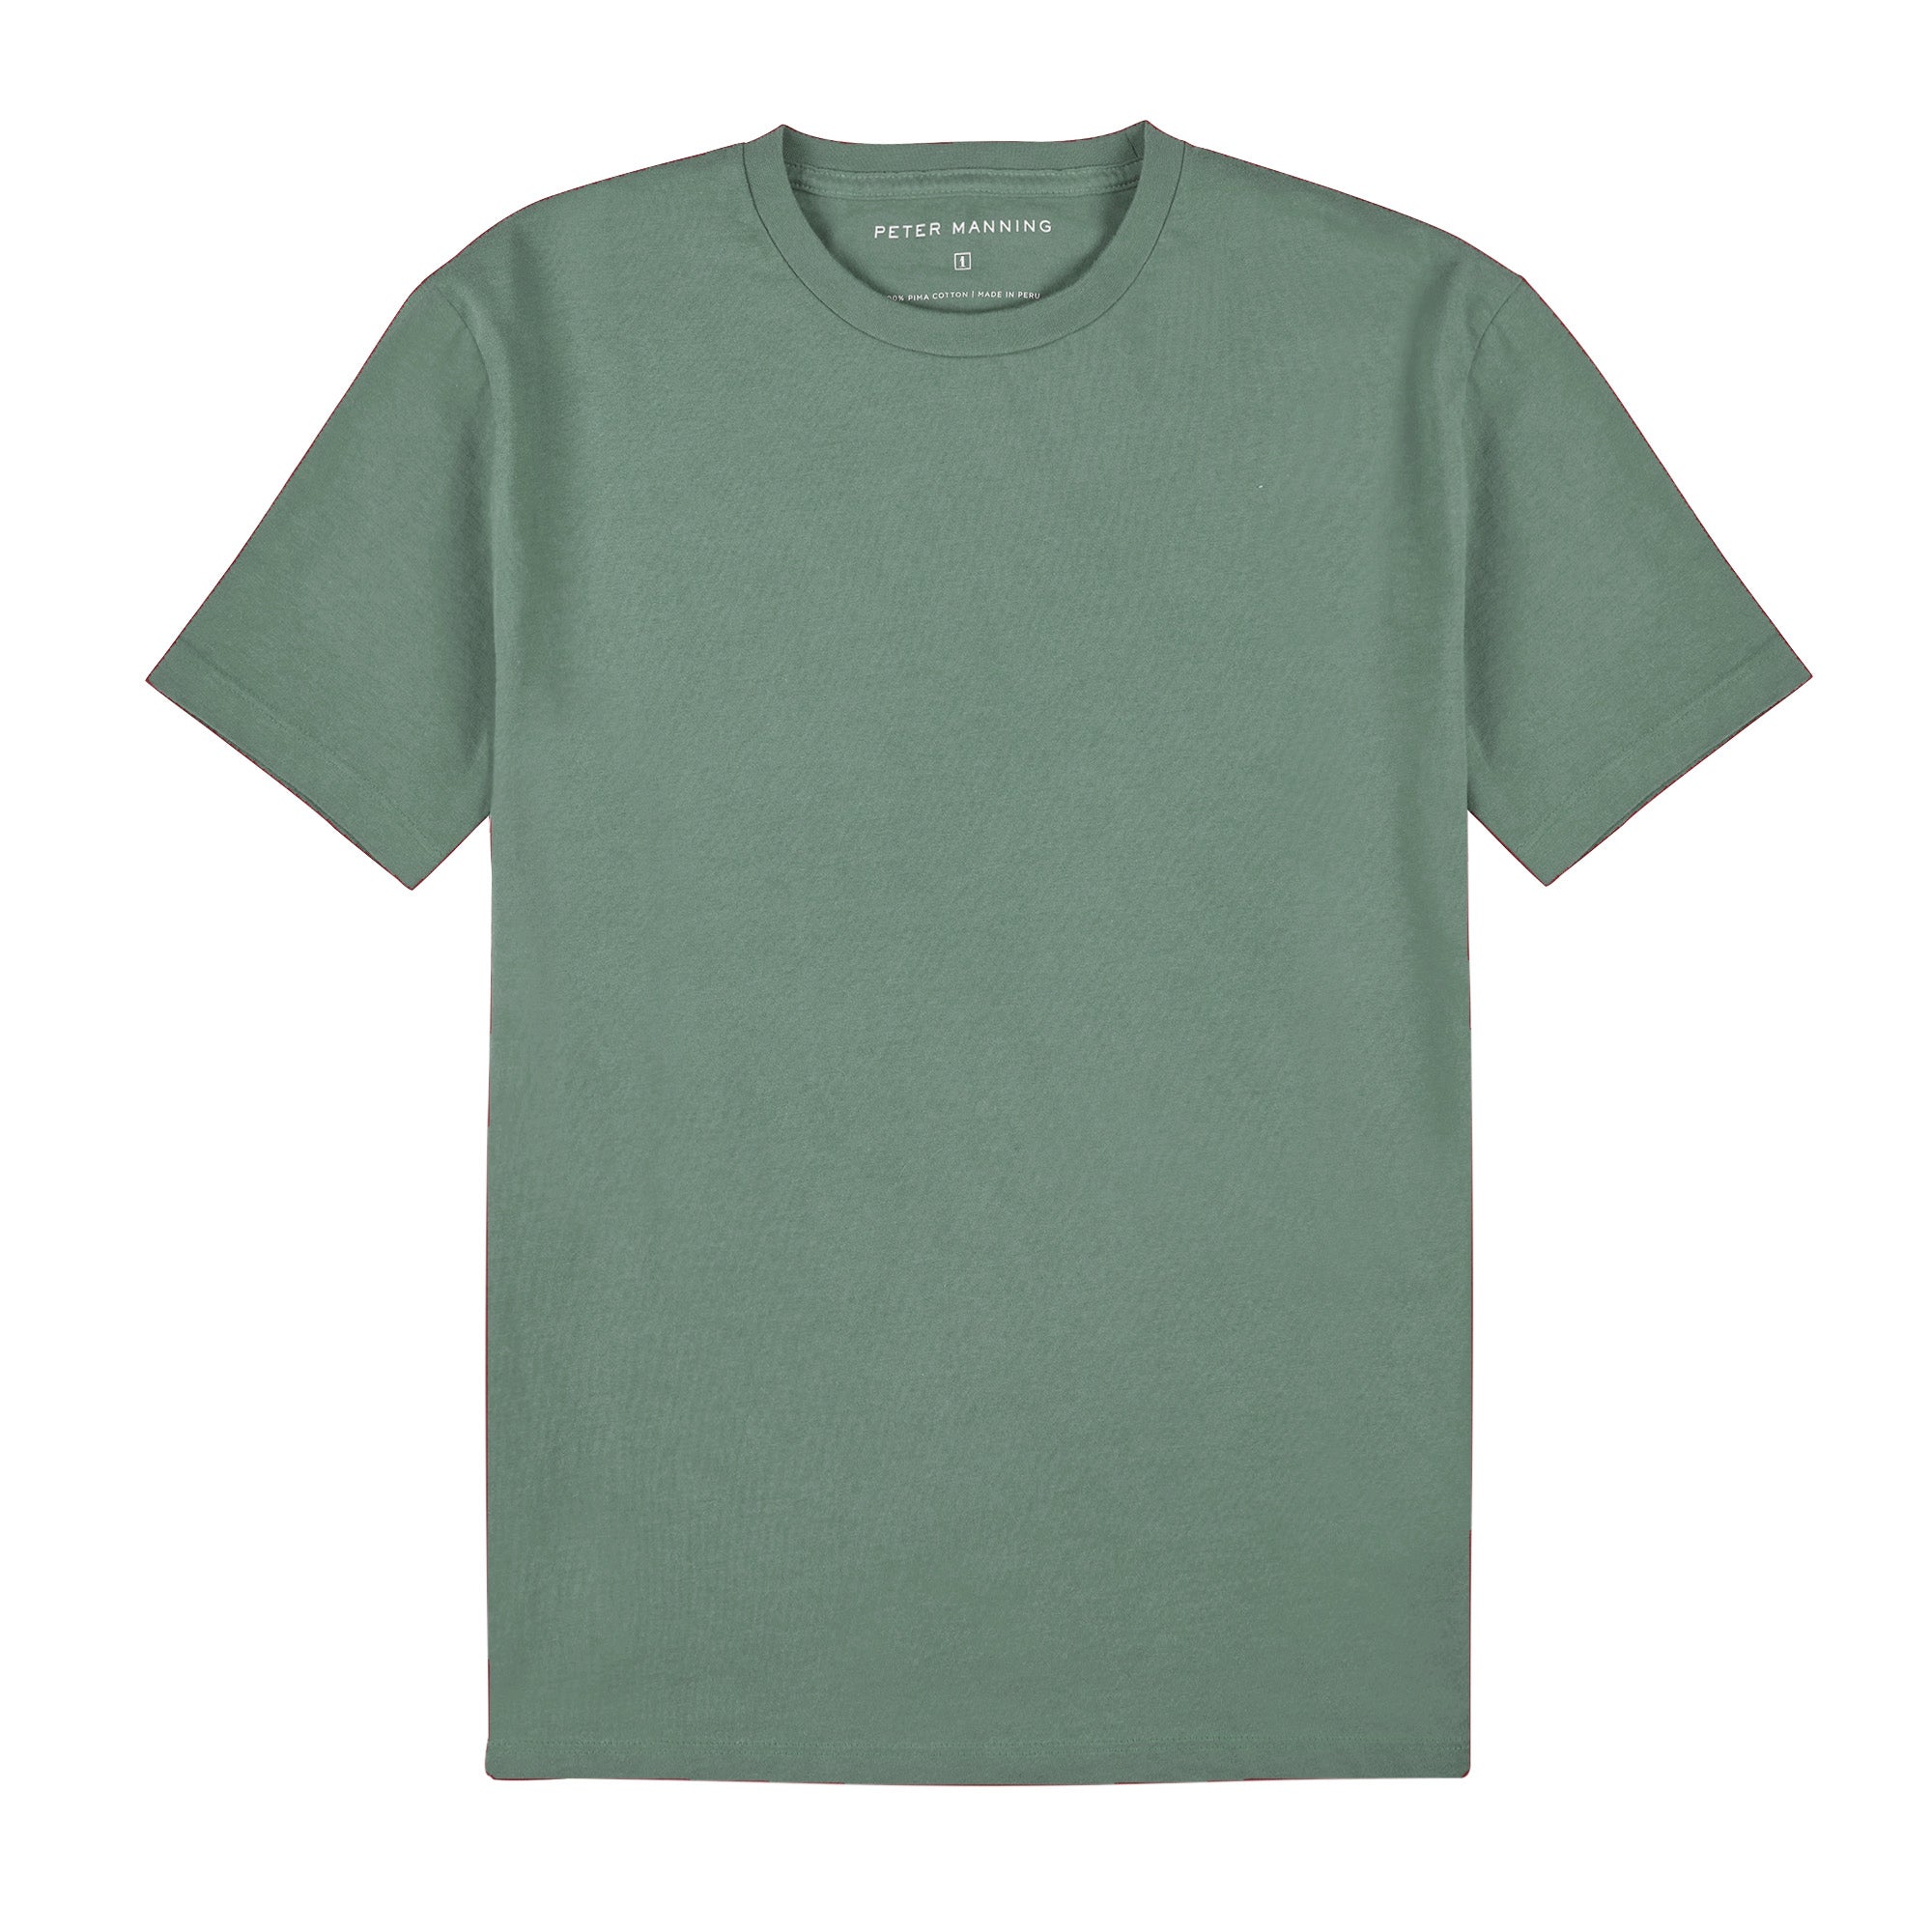 Vintage Crew T-Shirt - Army Green